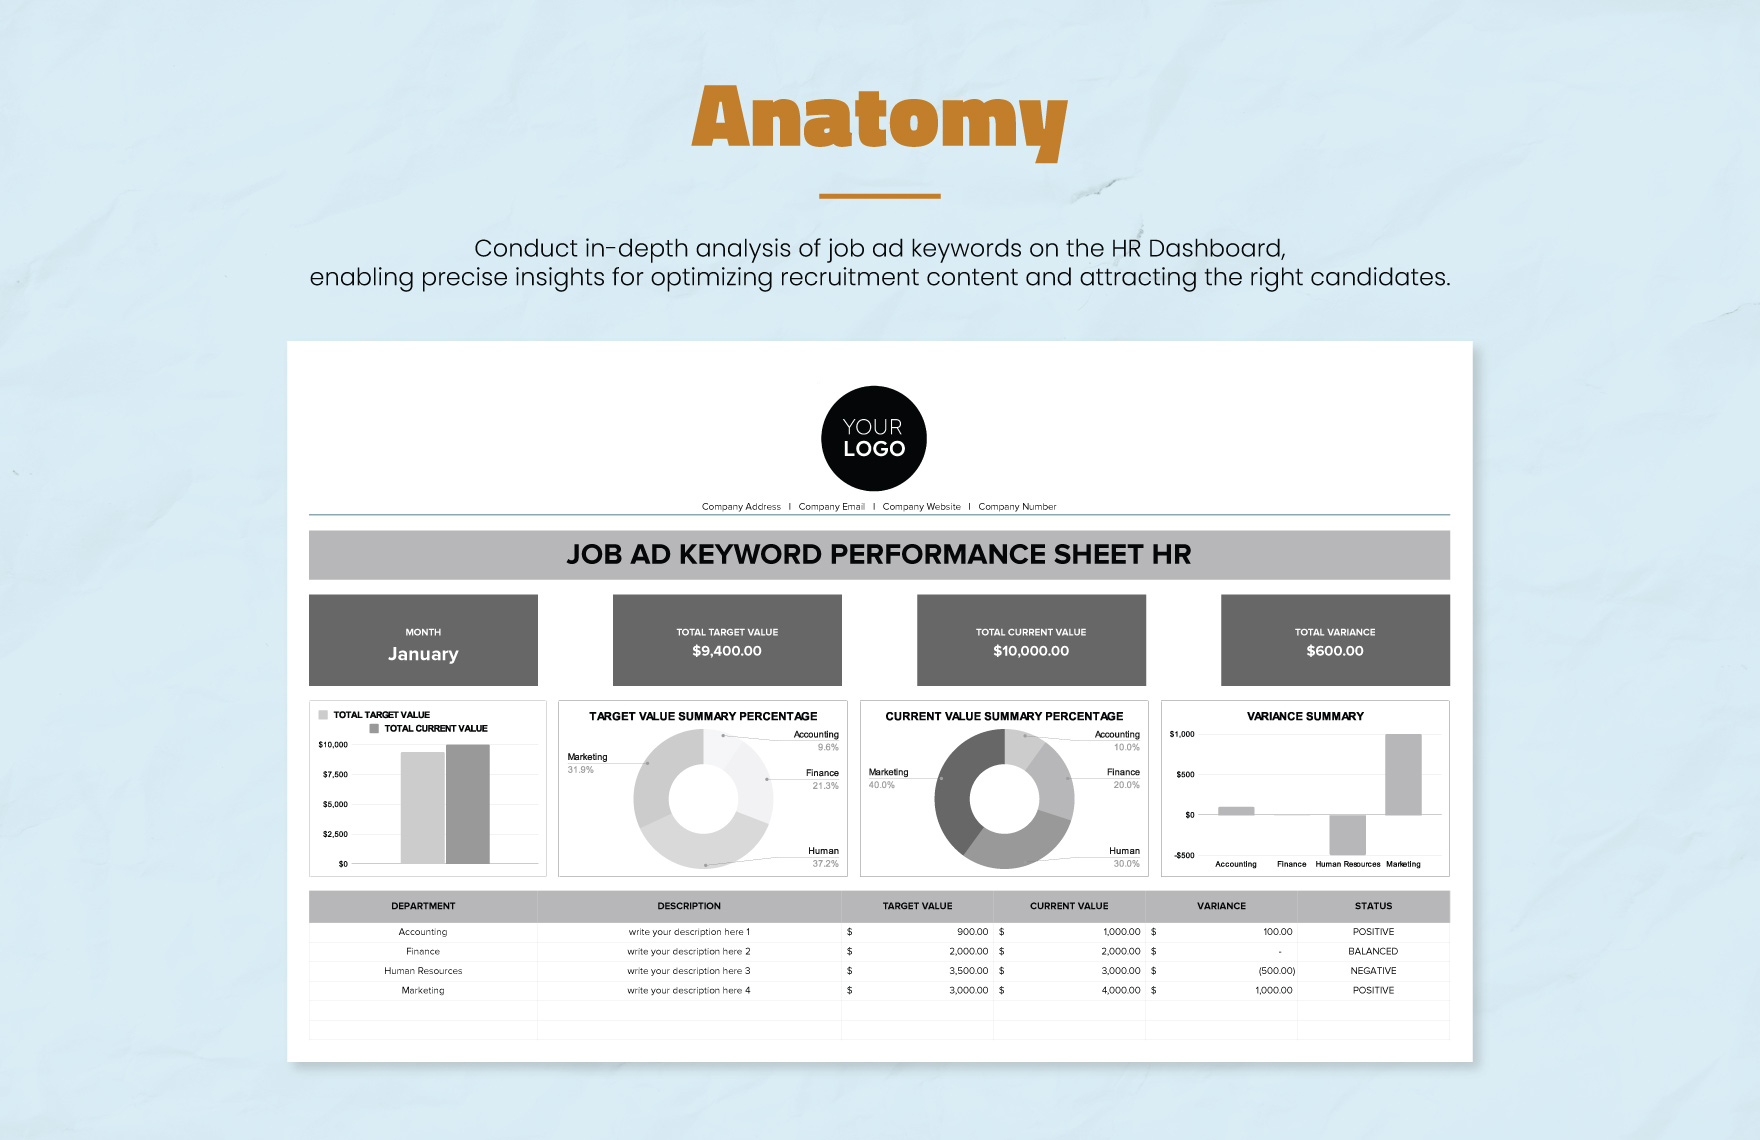 Job Ad Keyword Performance Sheet HR Template